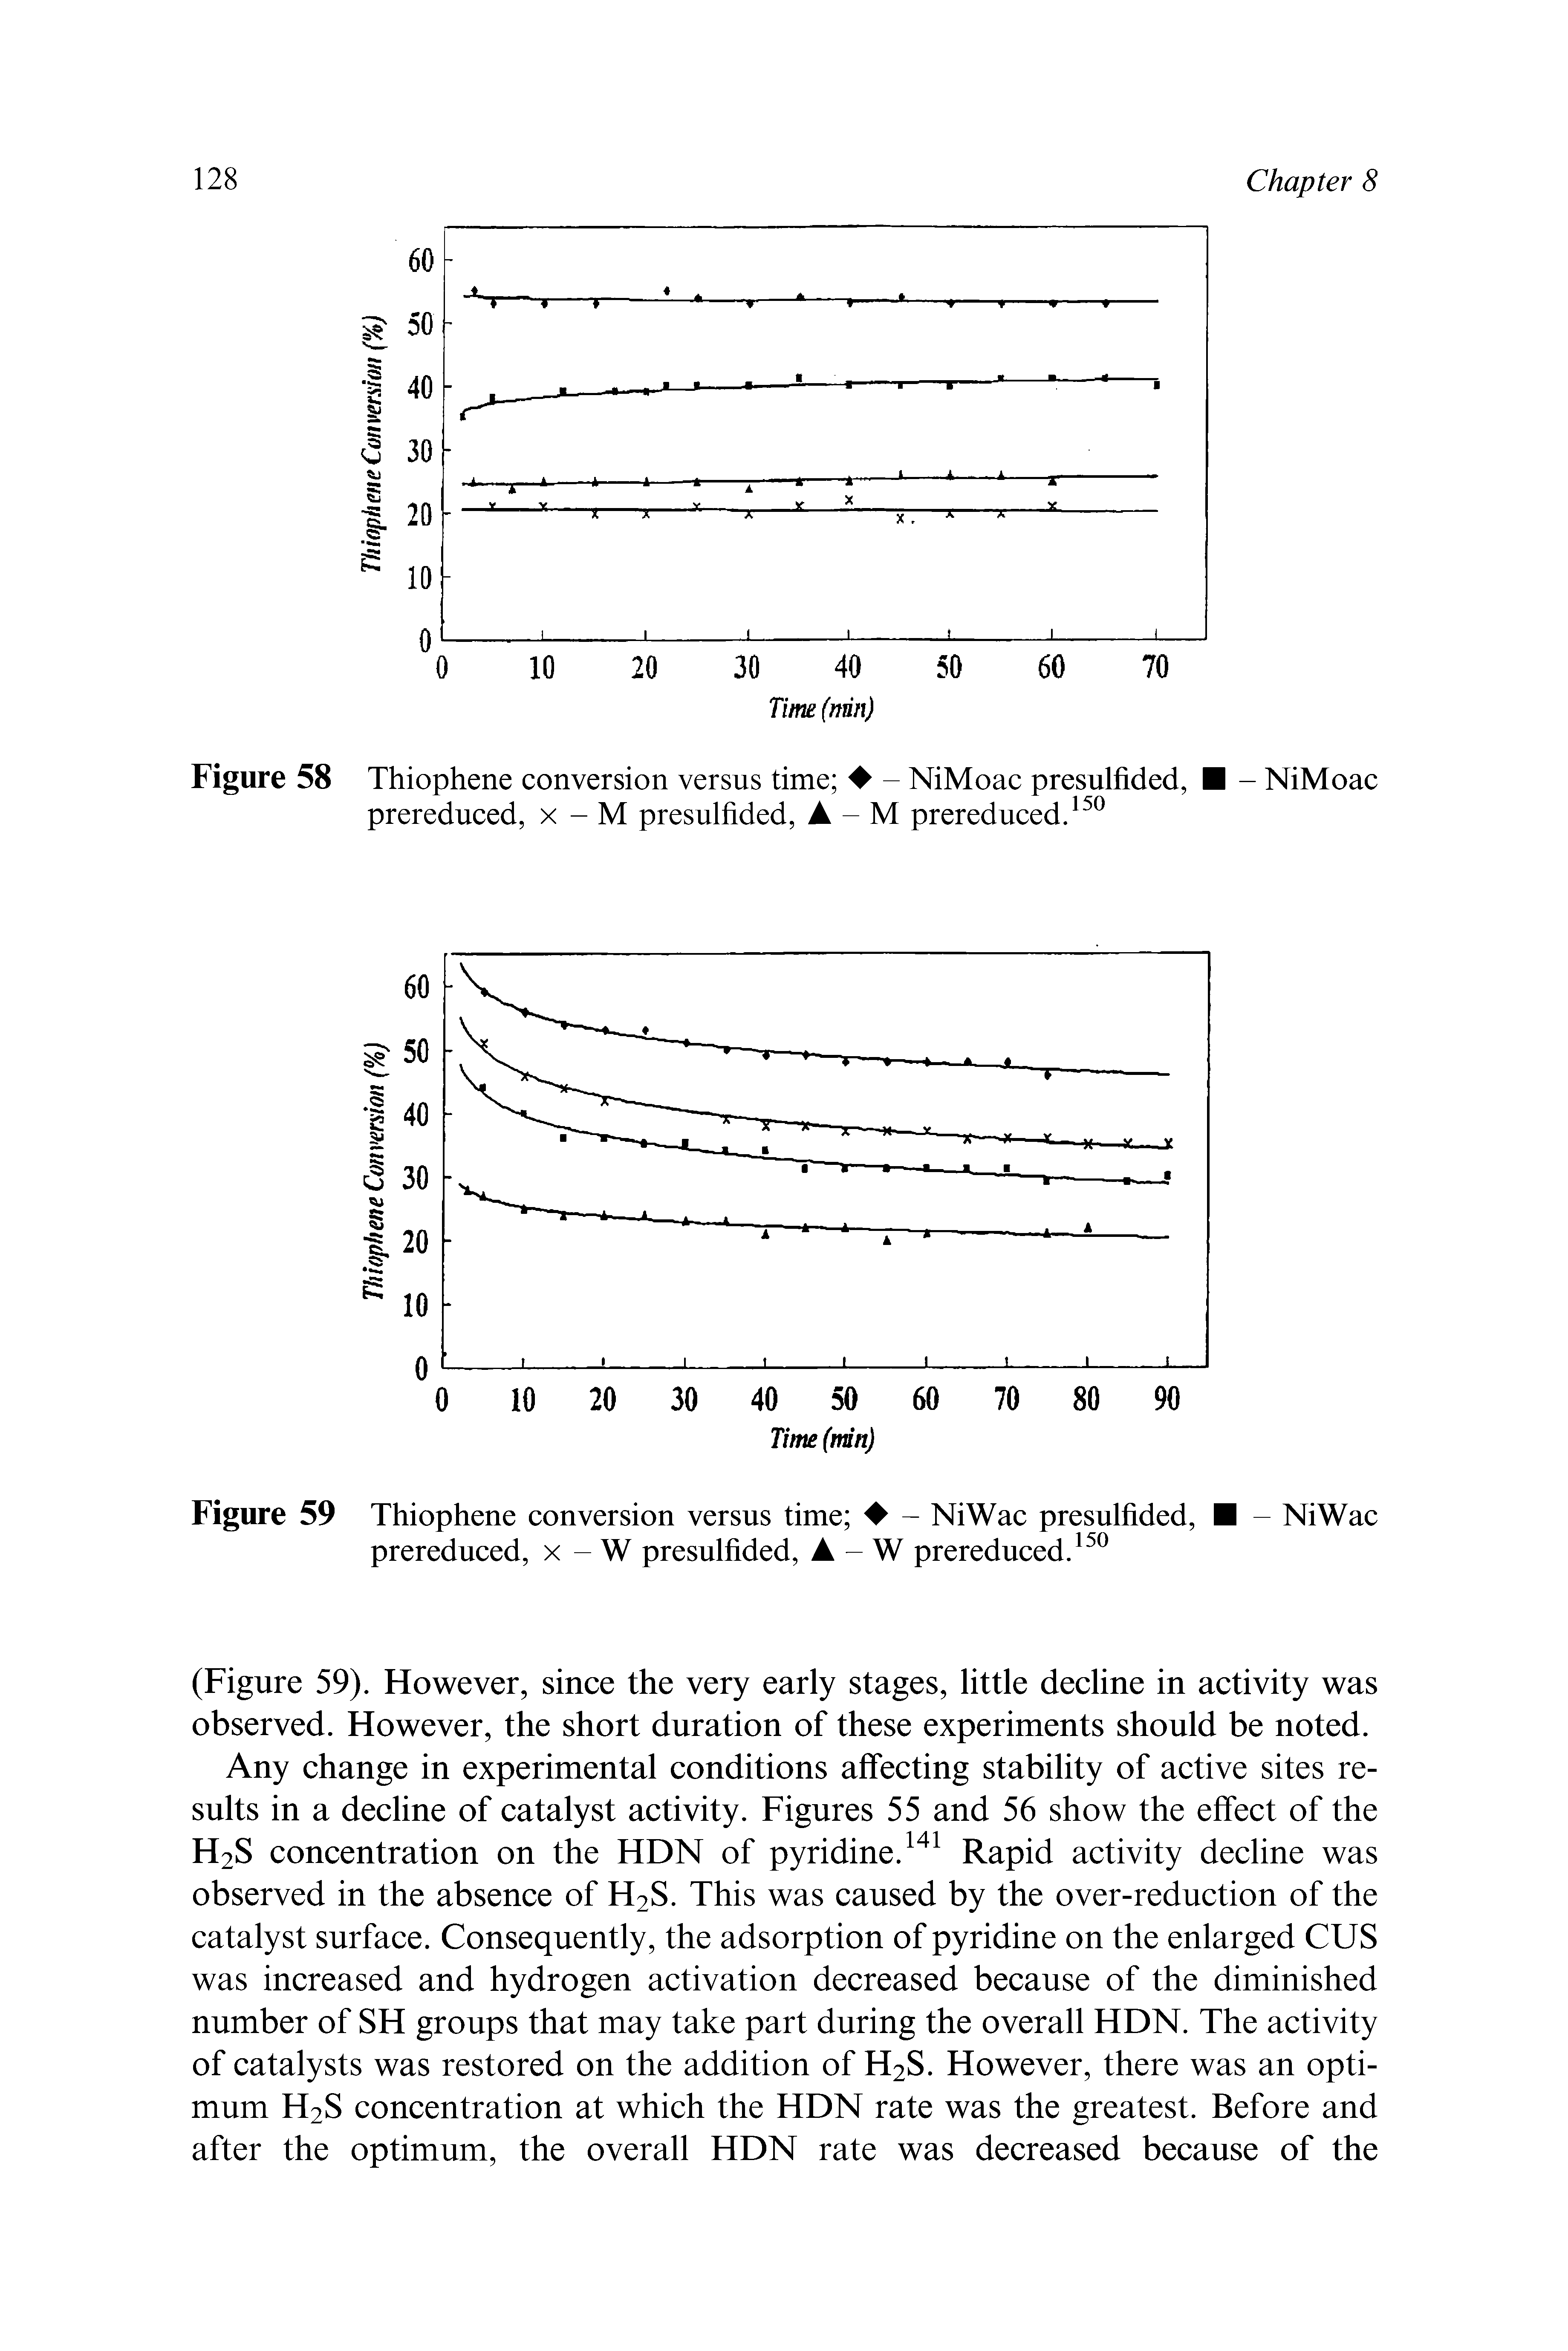 Figure 58 Thiophene conversion versus time - NiMoac presulfided, prereduced, x - M presulfided, A - M prereduced.